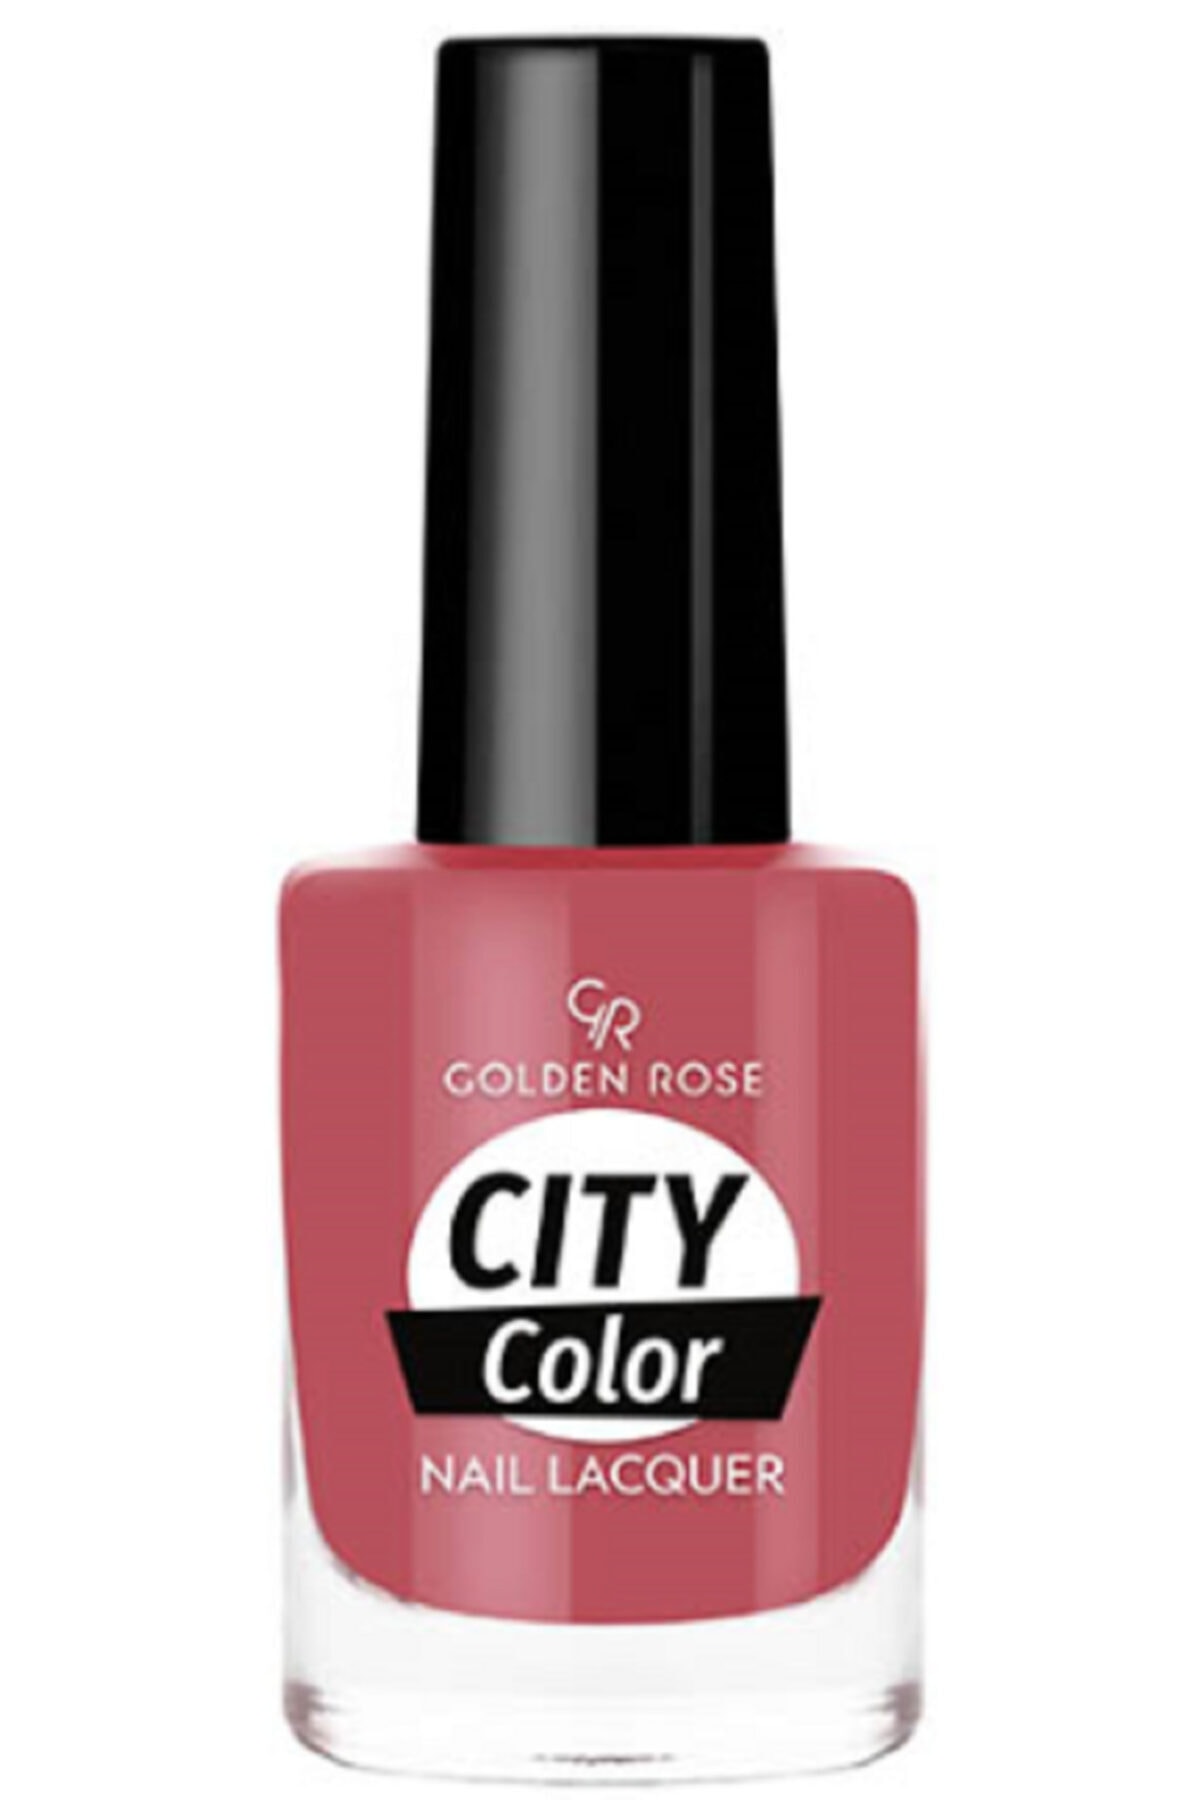 لاک ناخن سیتی کالر City color رنگ بنفش روشن شماره 83 گلدن رز Golden Rose